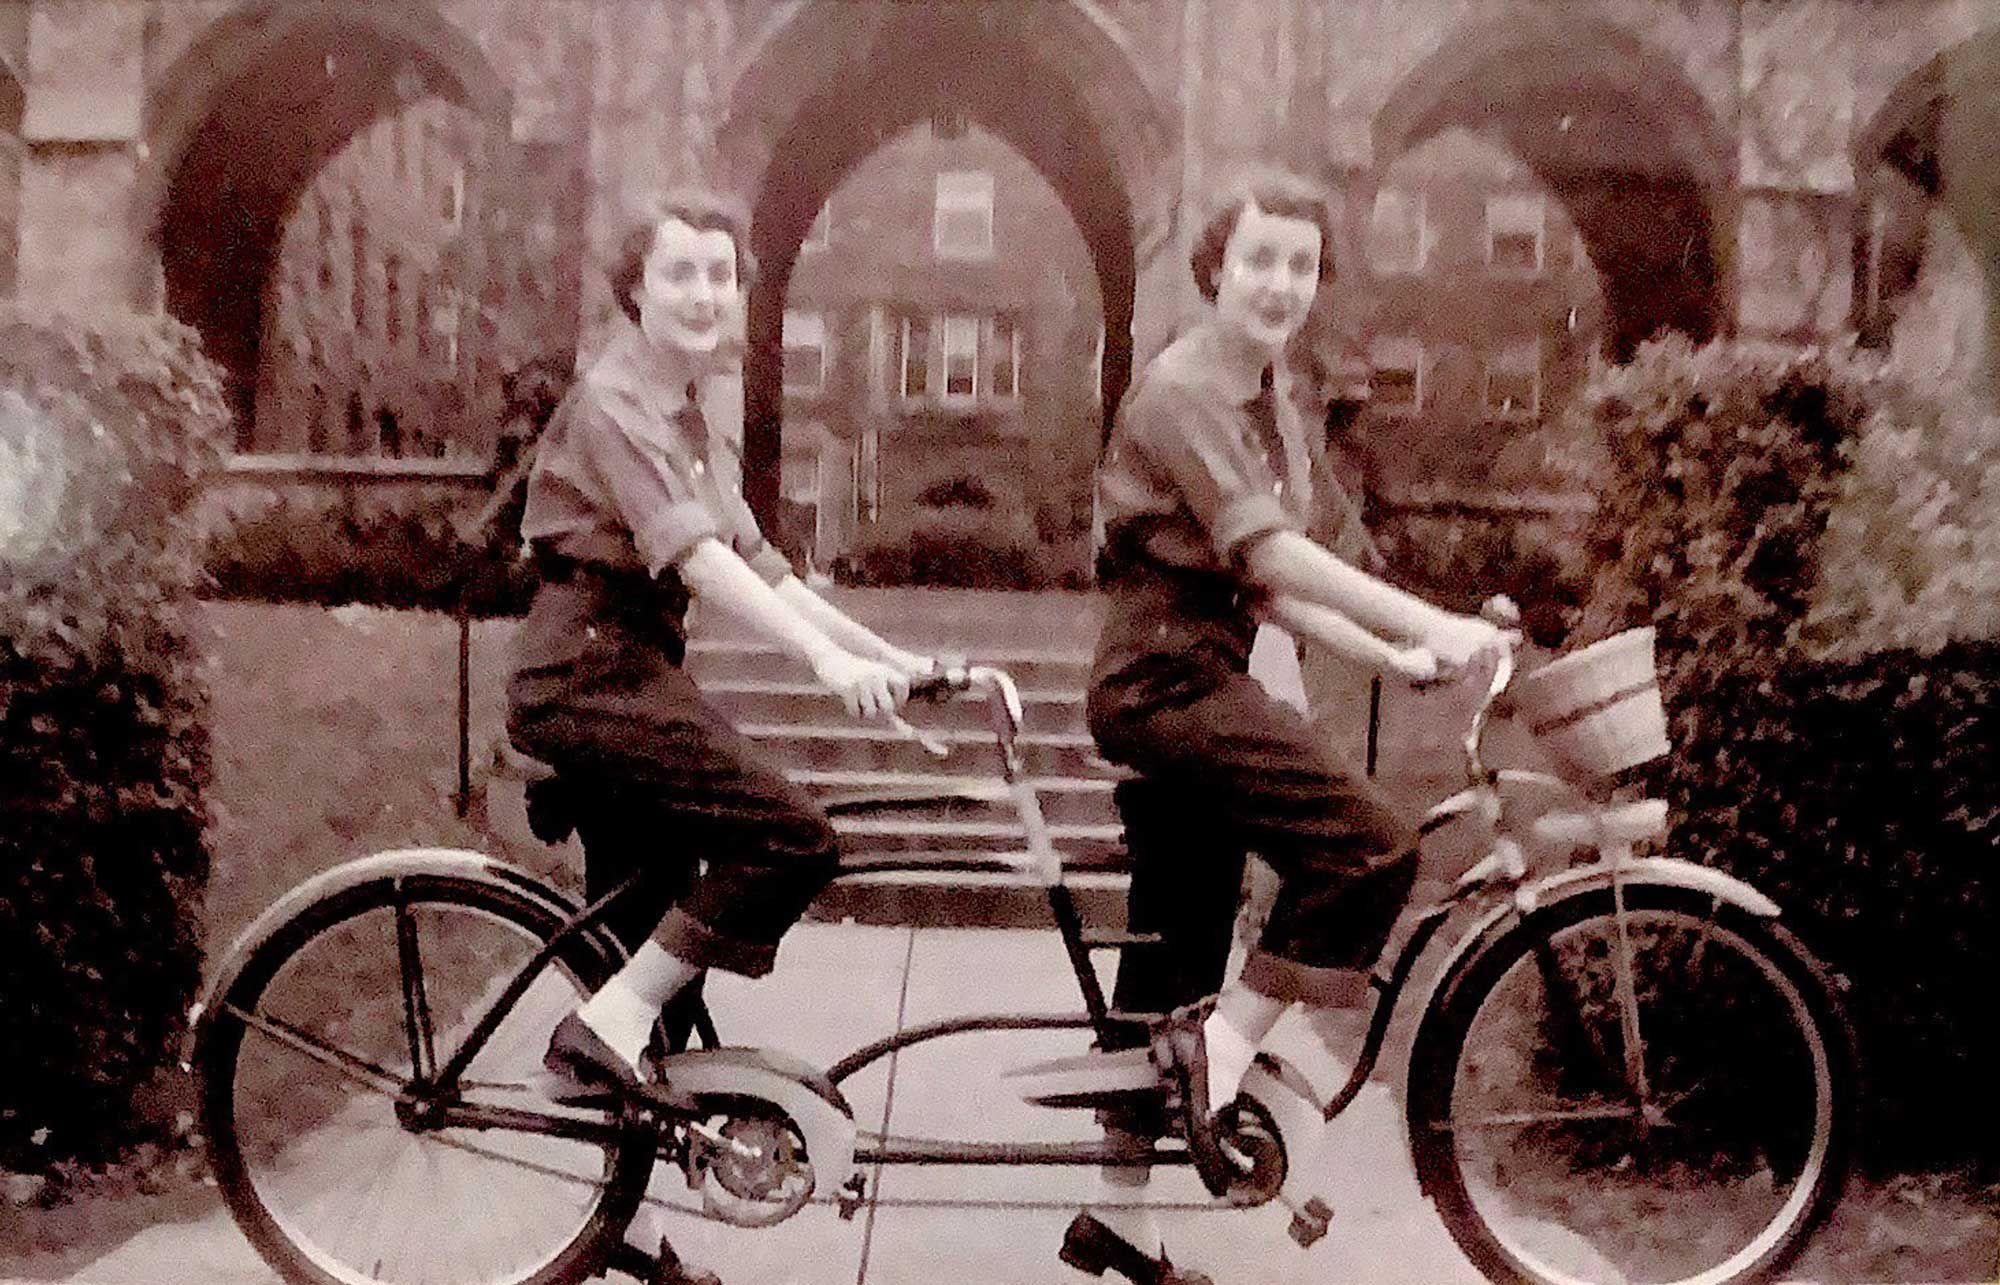 Stegner twins on bicycle